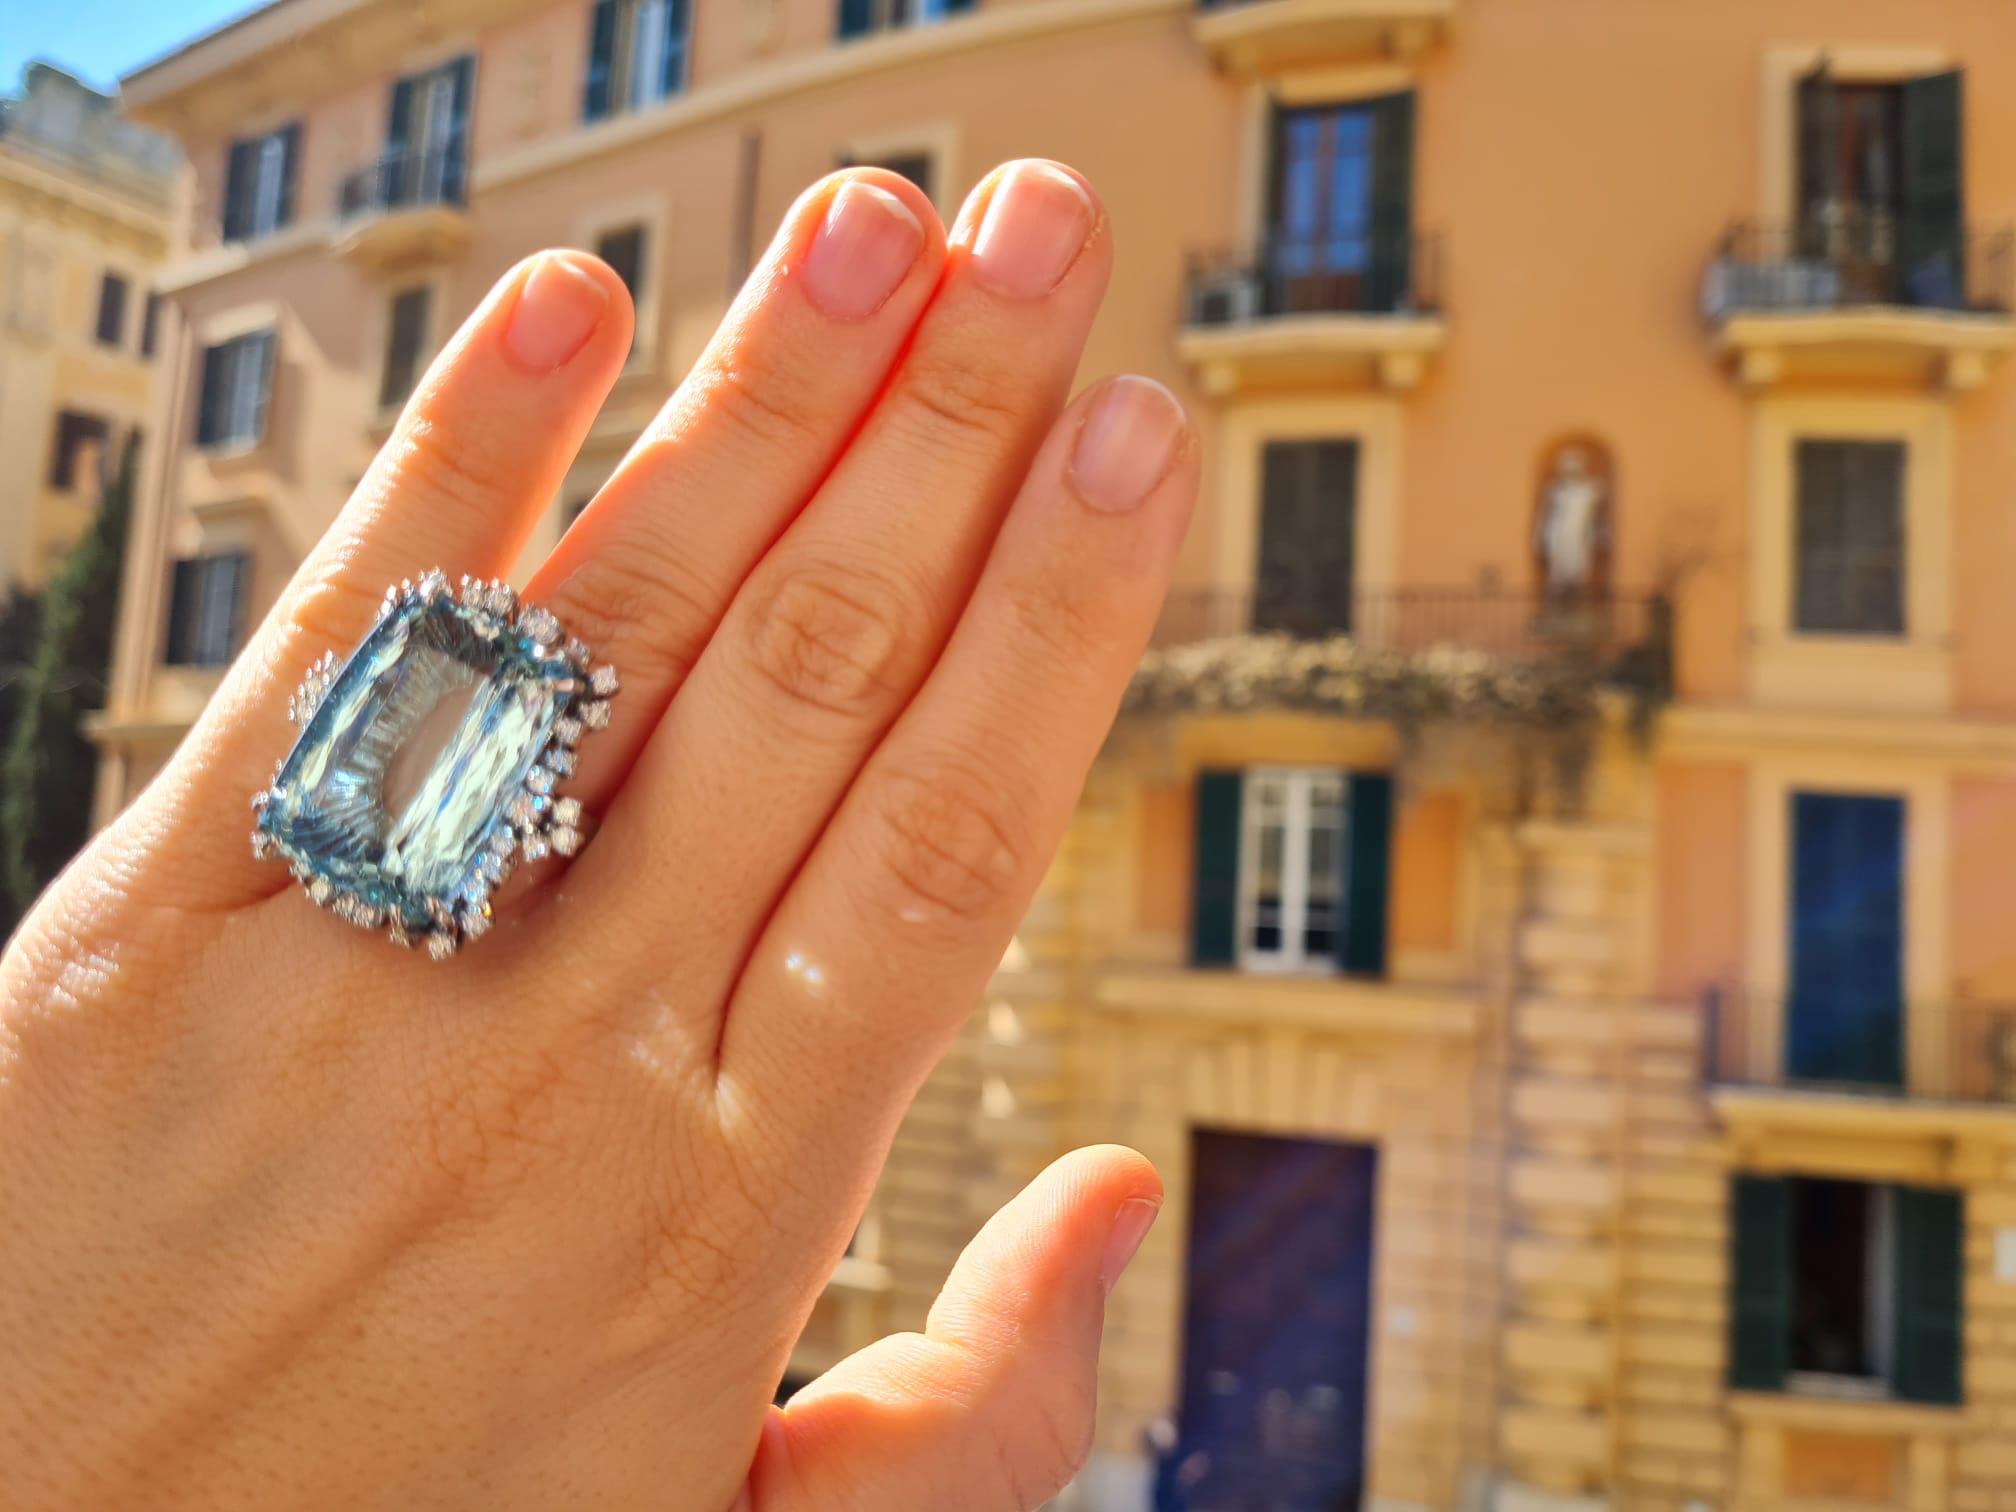 40 carat diamond ring